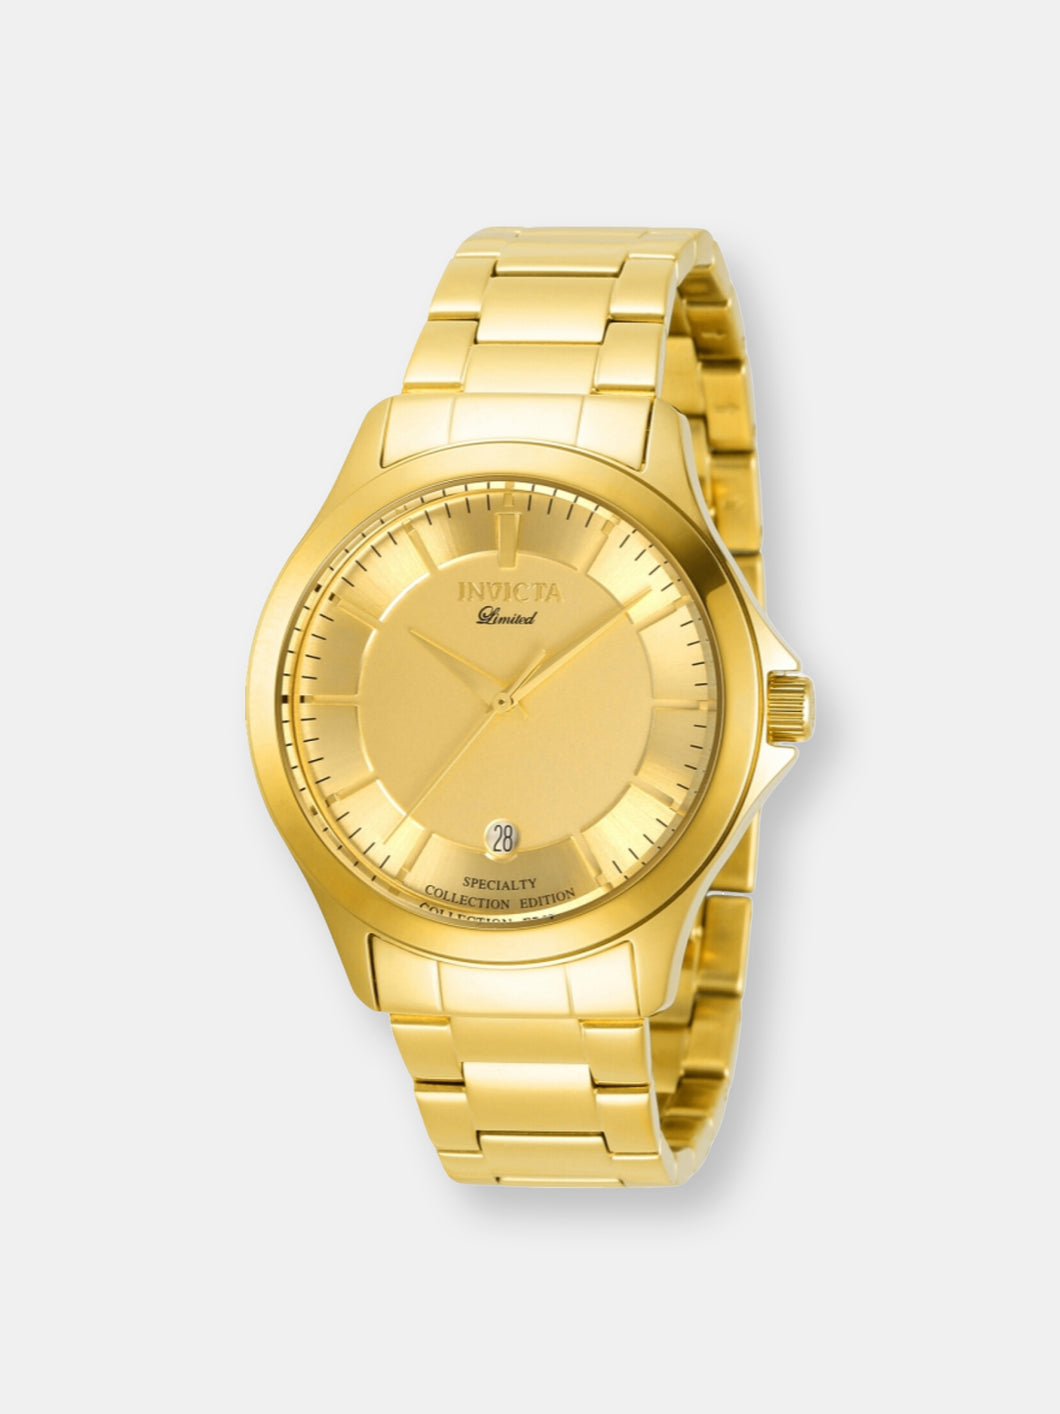 Invicta Men's Specialty 31124 Gold Stainless-Steel Quartz Dress Watch